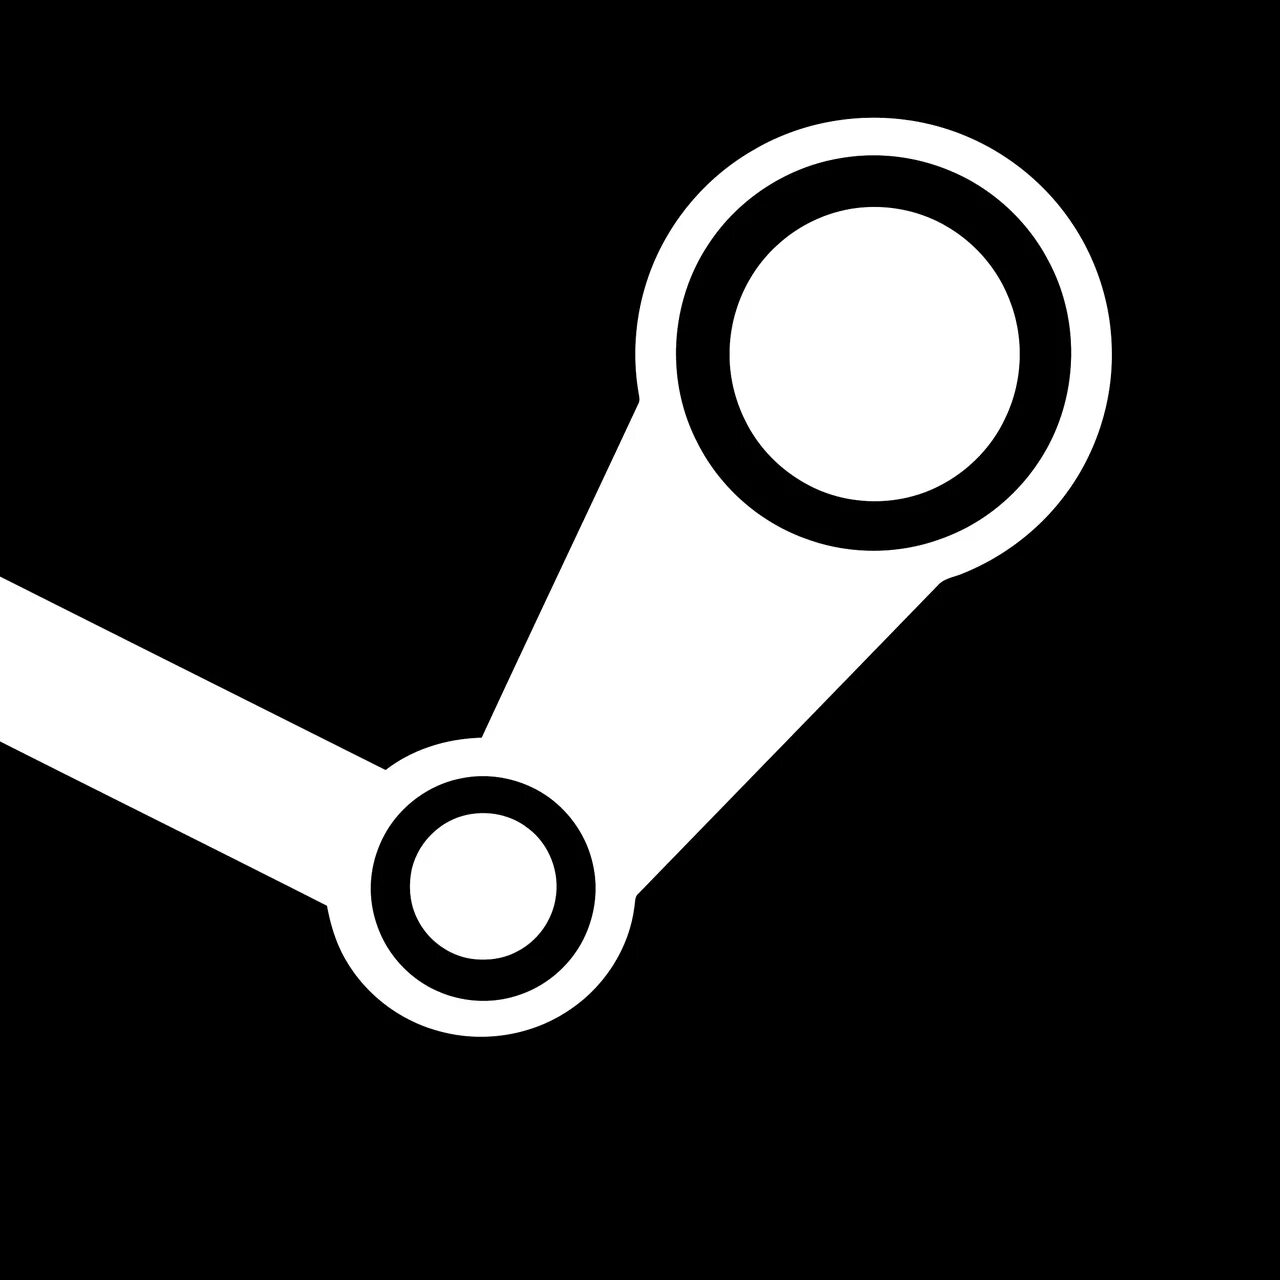 Значок Steam. Steam логотип PNG. Темные значки стим. Стеам значок ярлык.